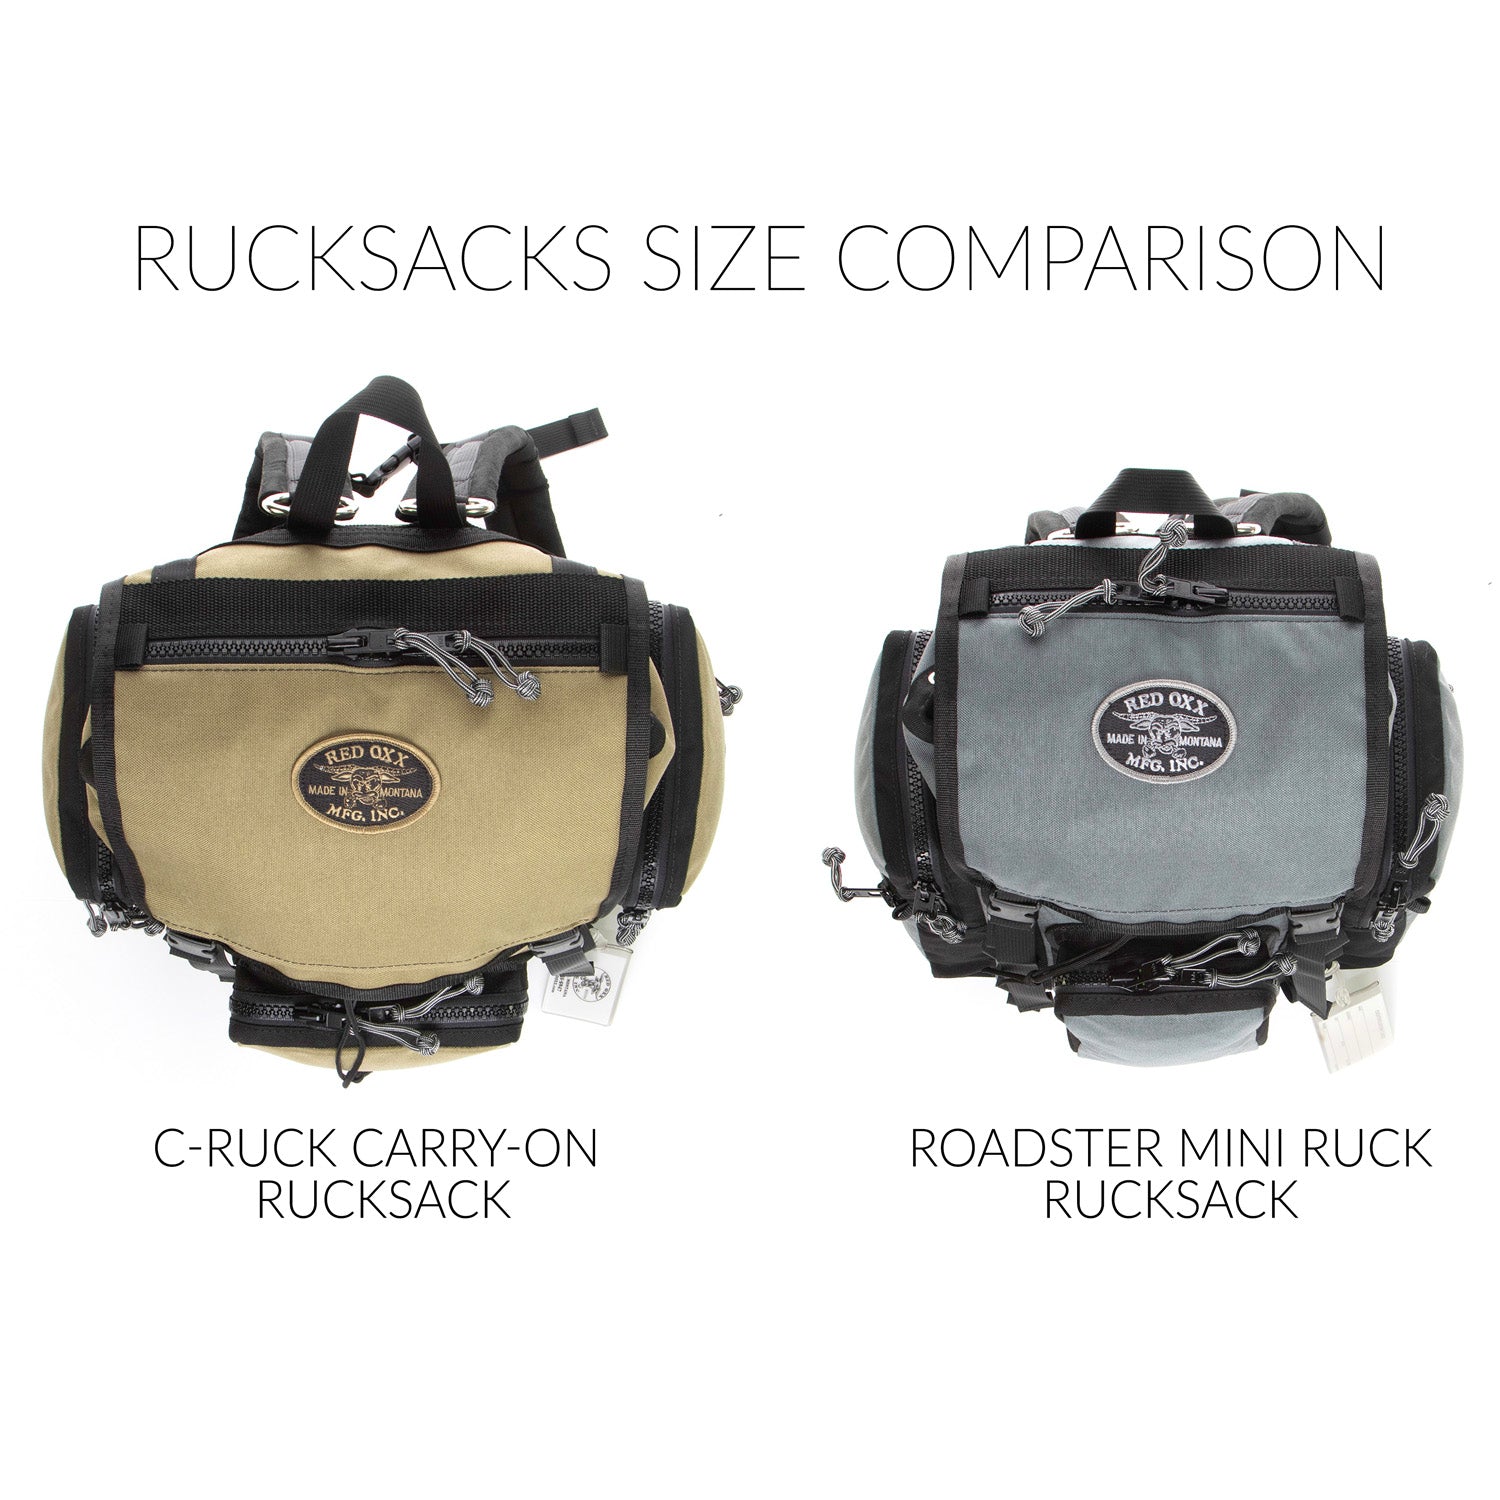 Roadster Mini Ruck Rucksack